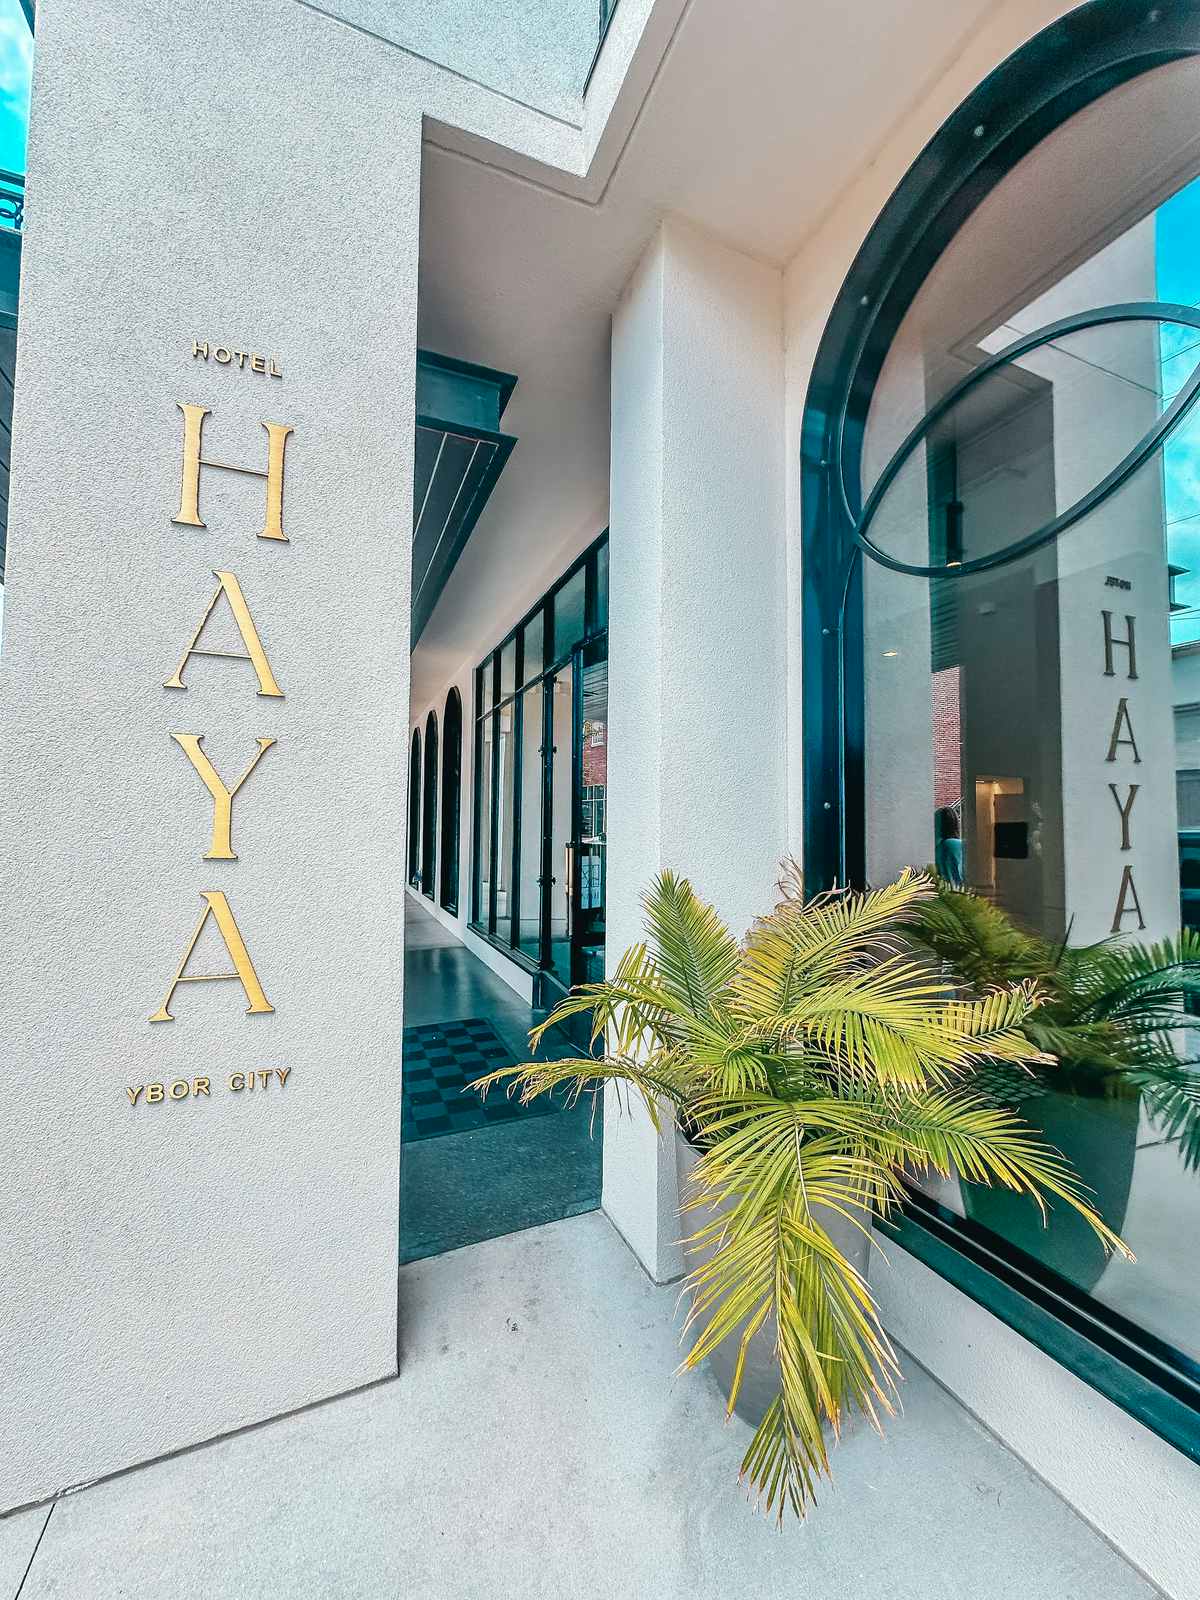 Hotel Haya in Ybor City Tampa